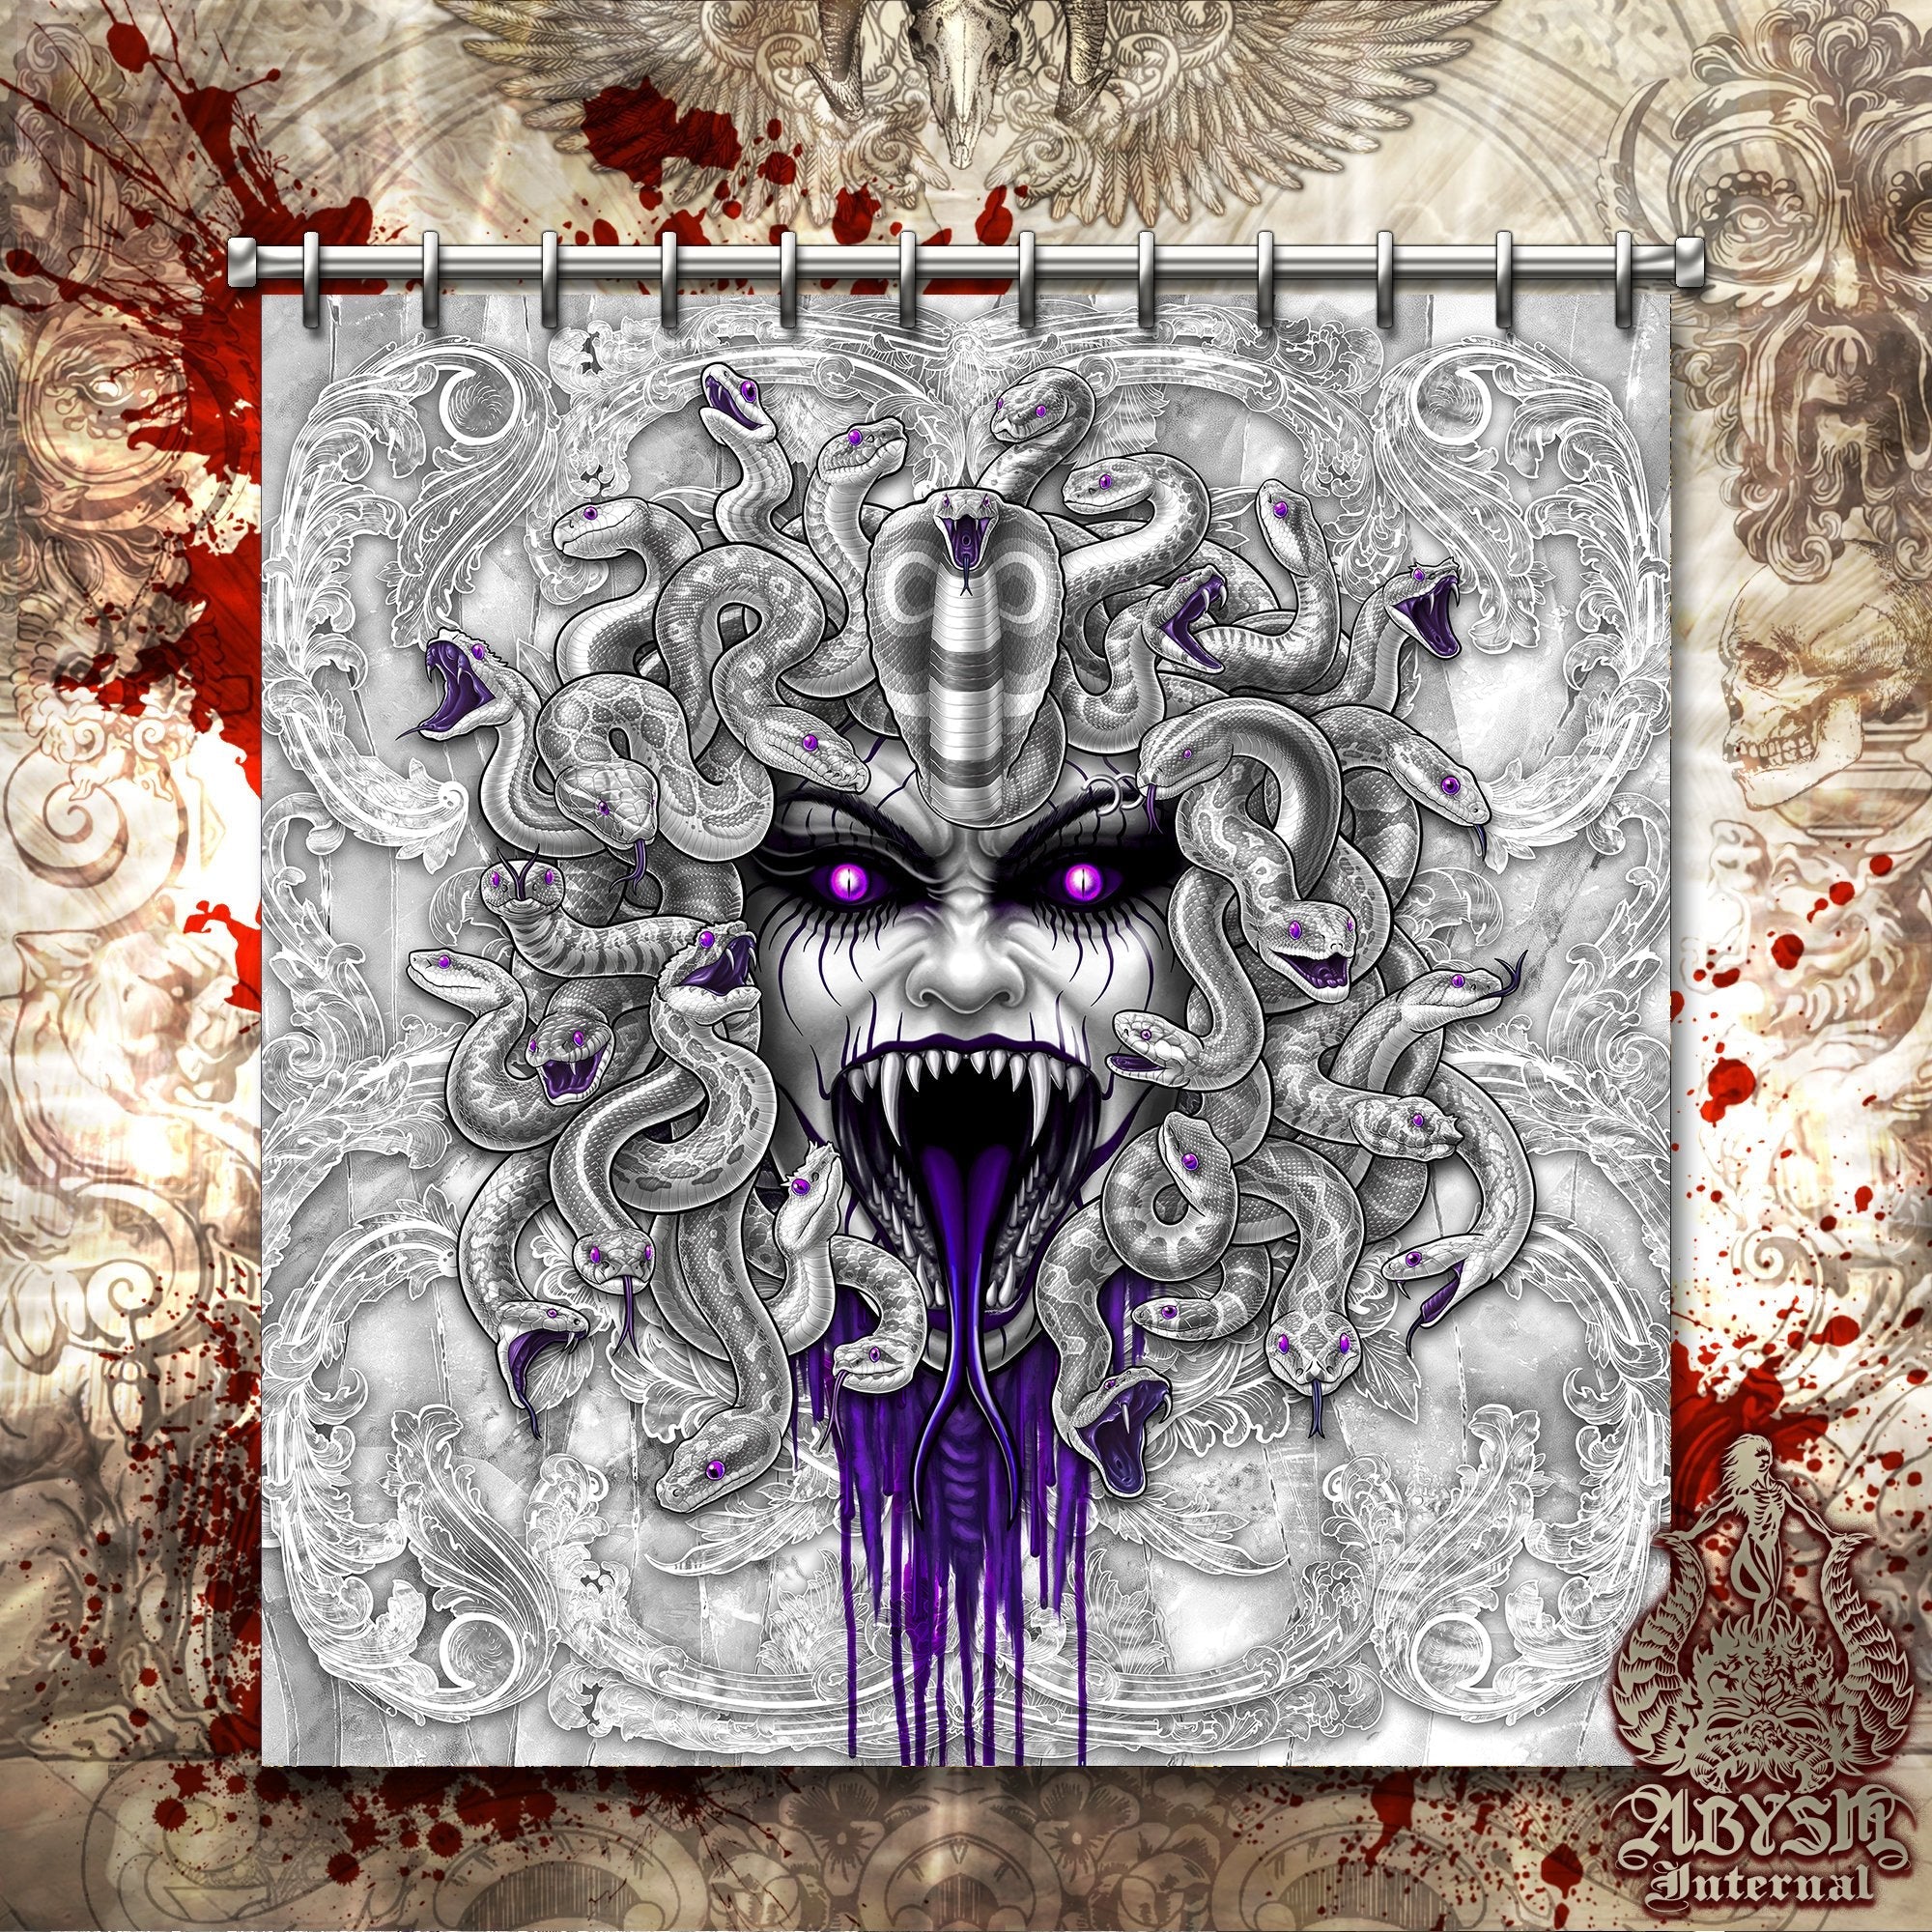 Horror Shower Curtain, Halloween, Gothic Bathroom Decor - Enraged Medusa, White Goth & Purple Snakes - Abysm Internal